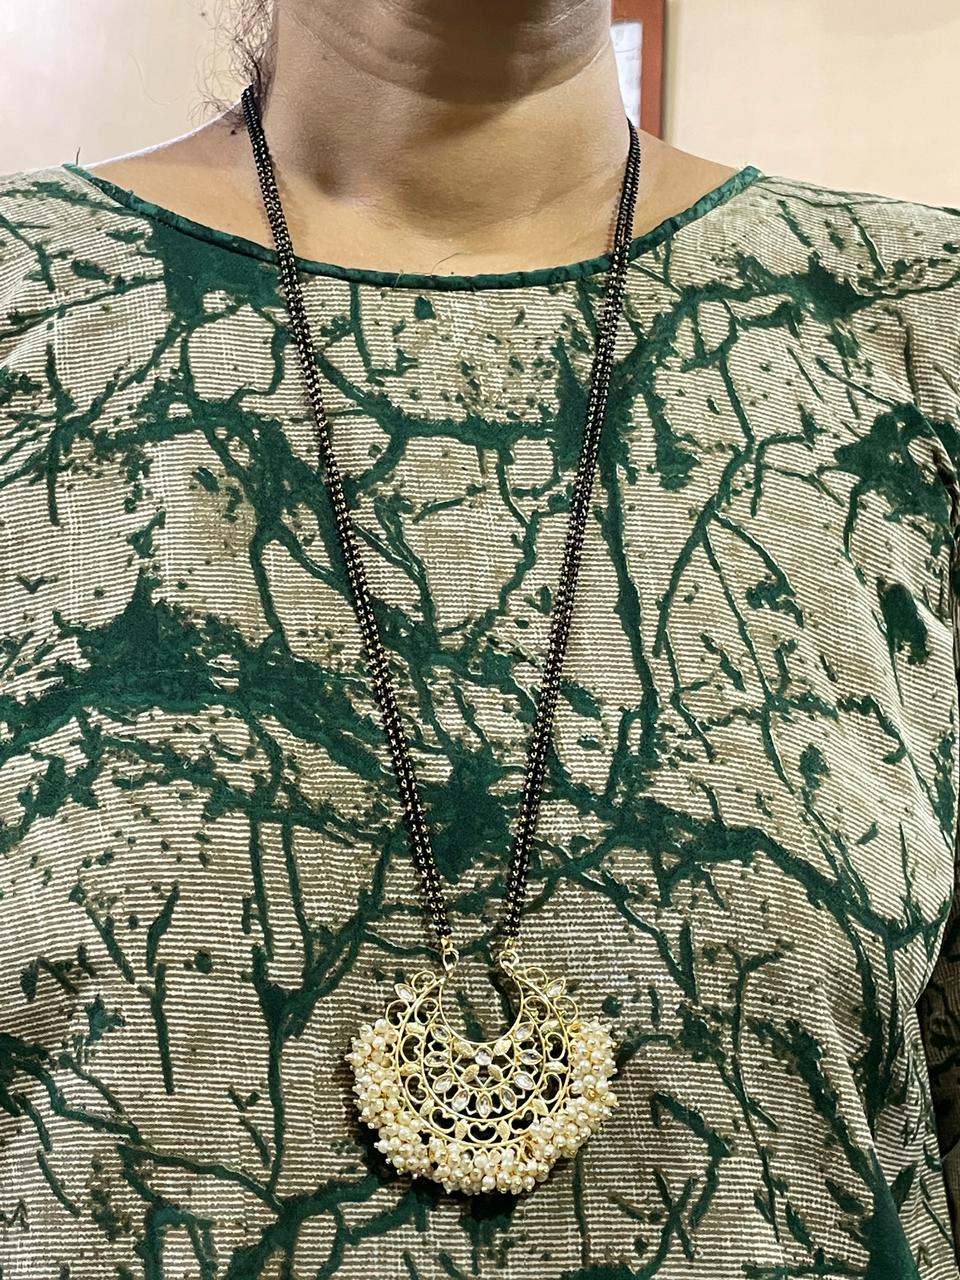 Beautiful Round Pearl Drop Mangalsutra - Abdesignsjewellery